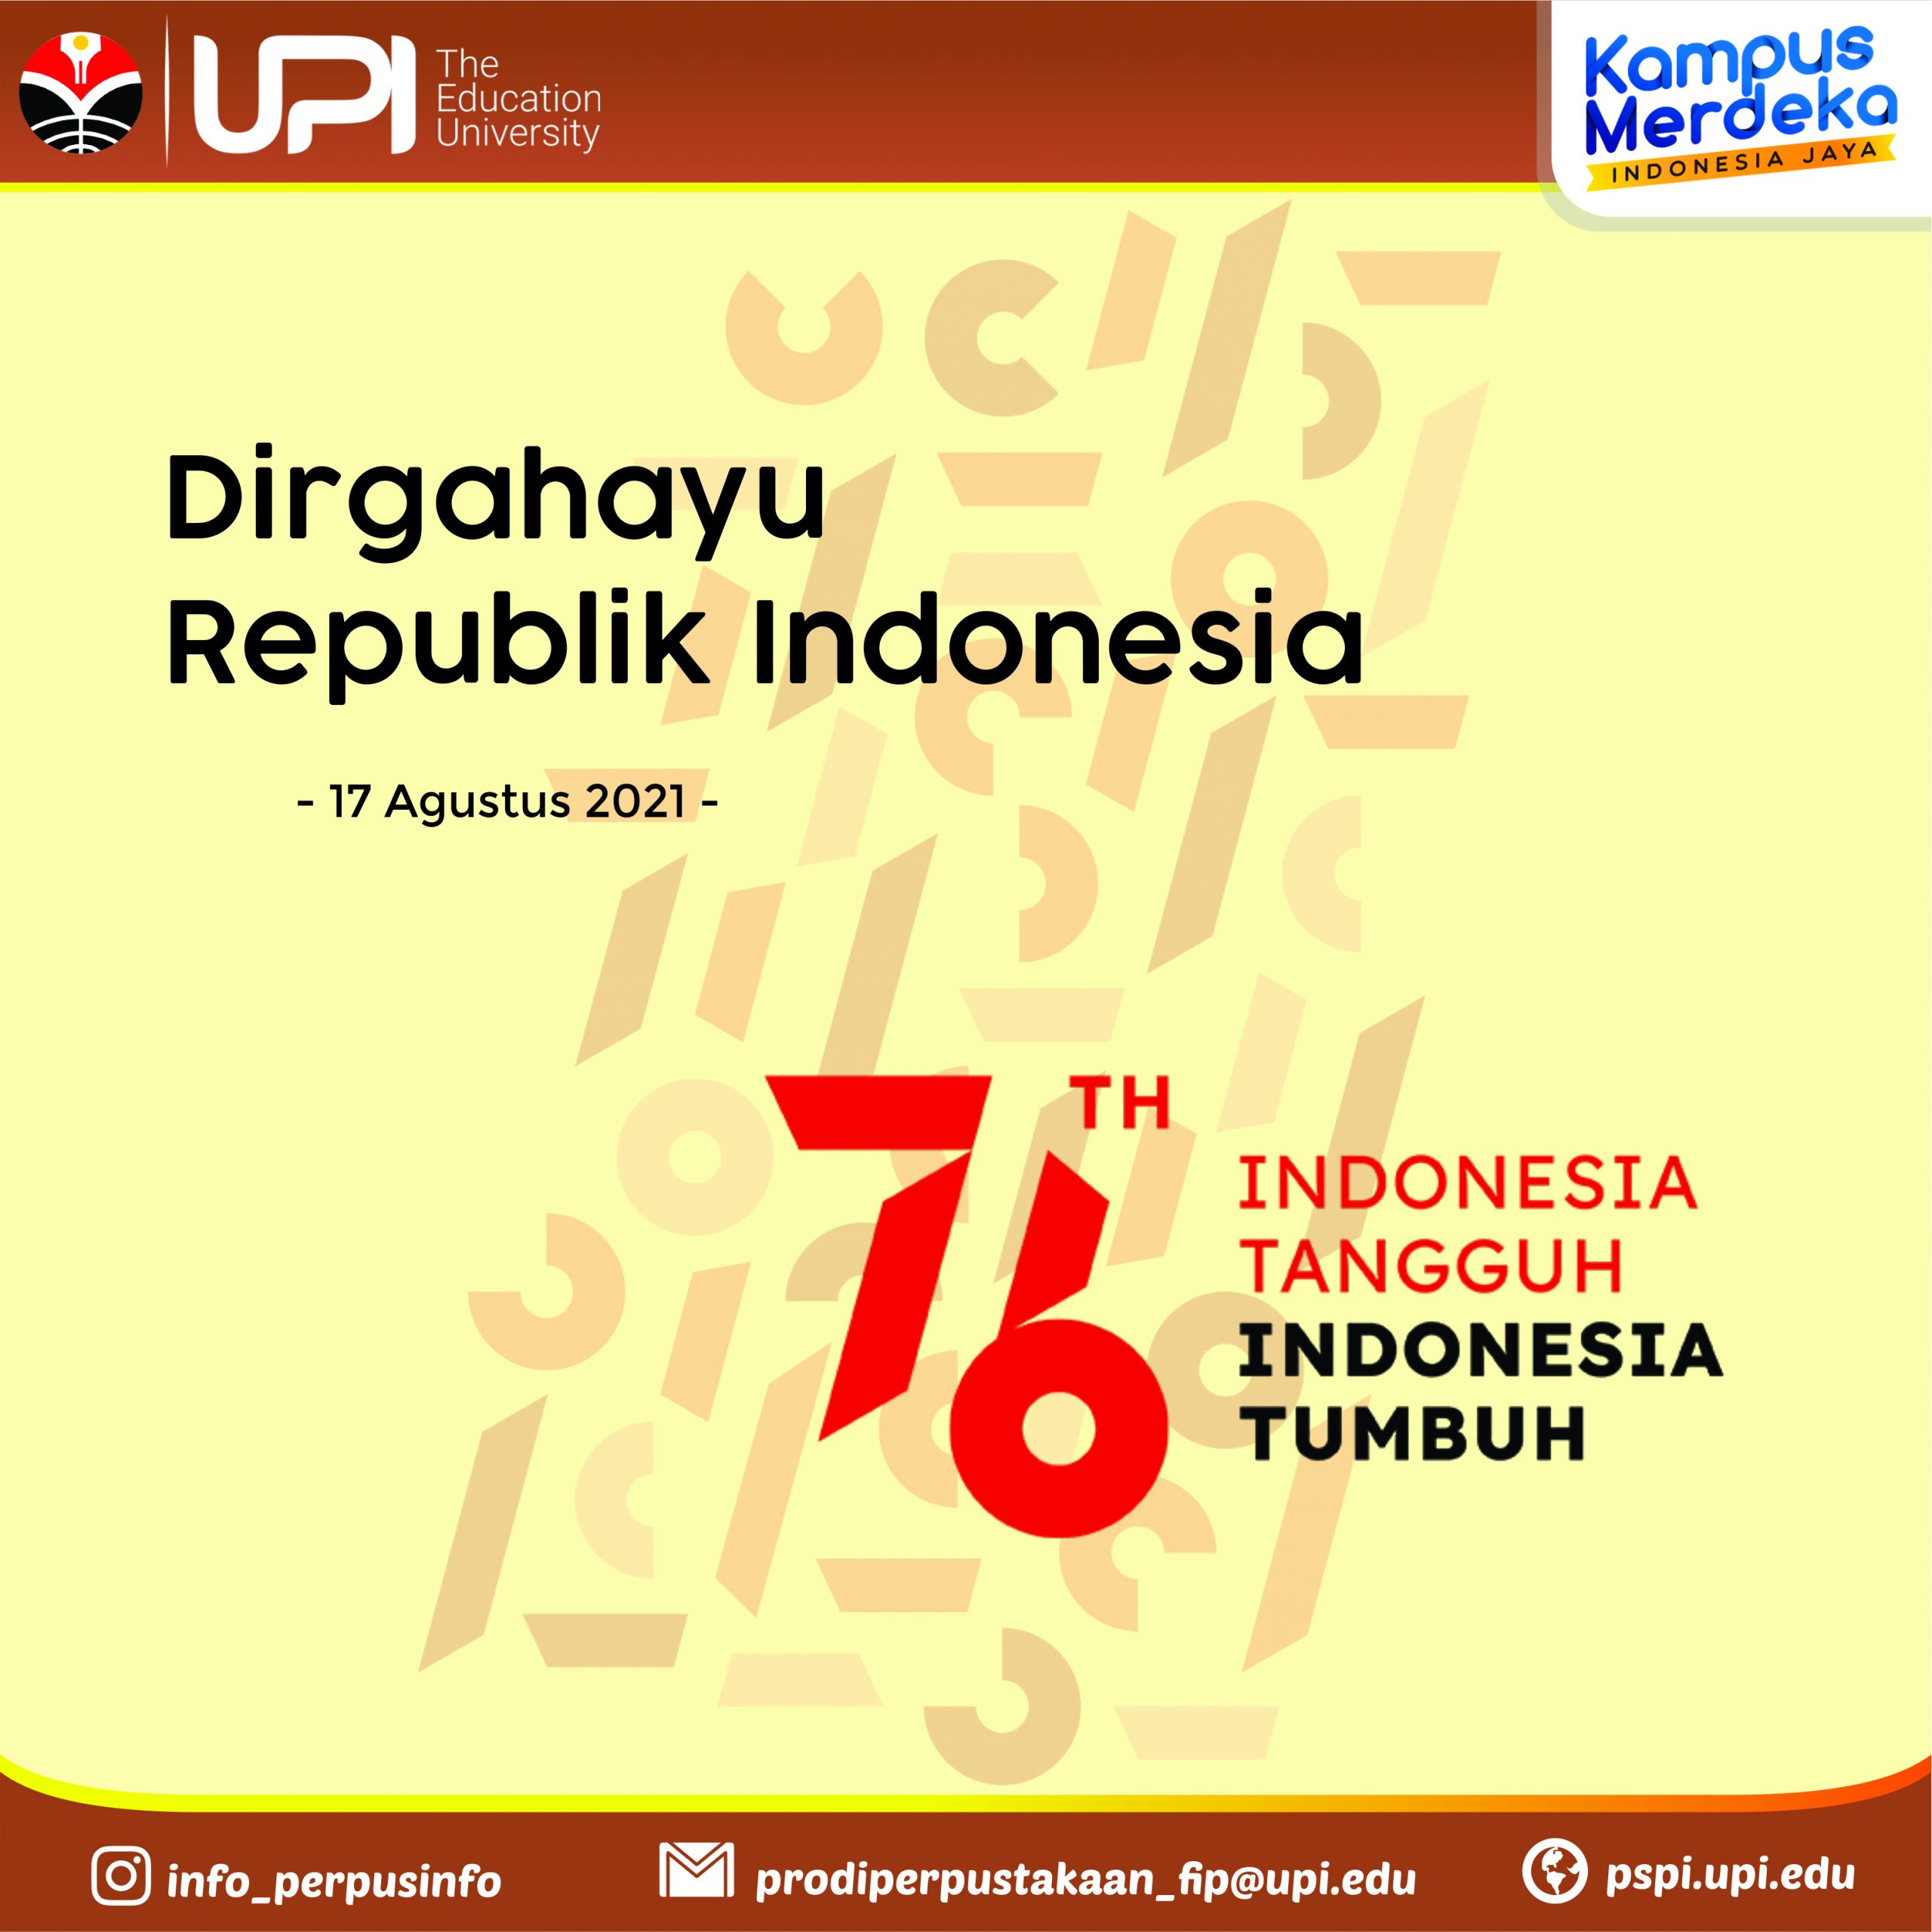 MEMPERINGATI DIRGAHAYU REPUBLIK INDONESIA KE-76 TAHUN